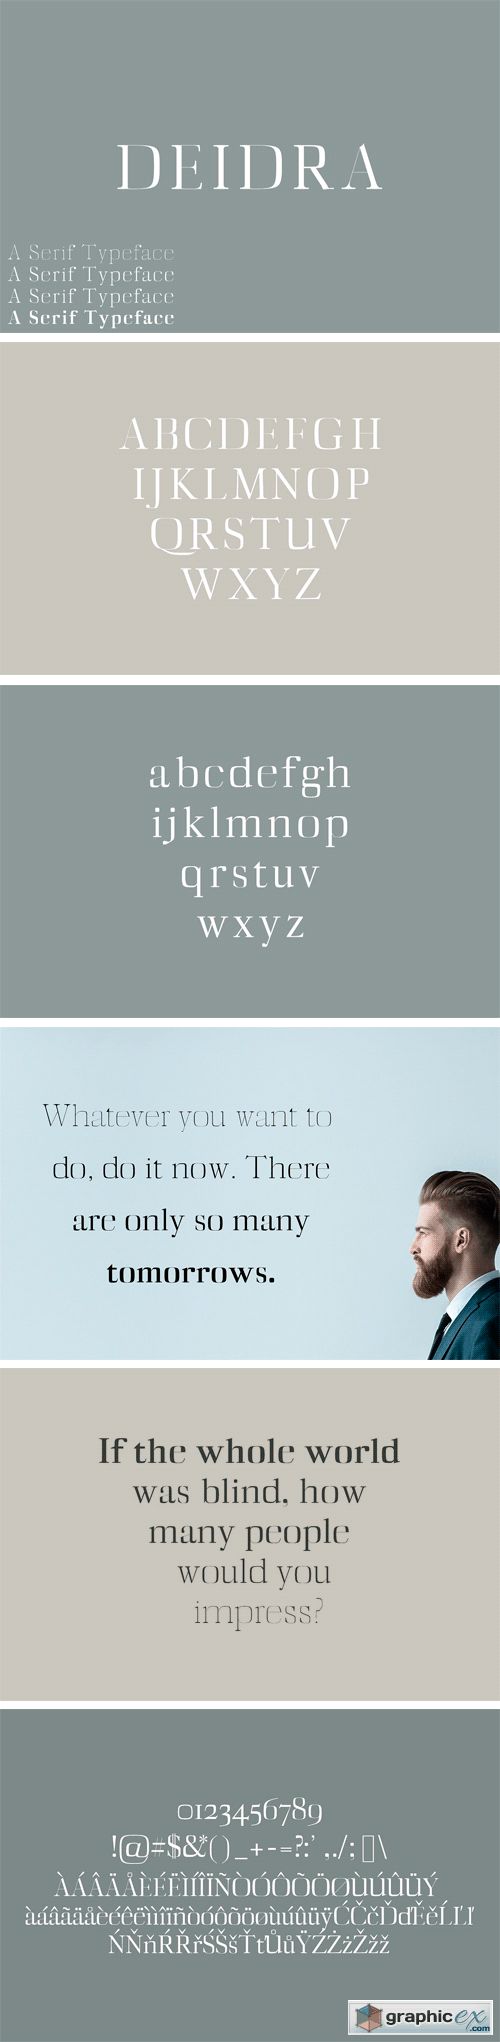 Diedra Serif Typeface